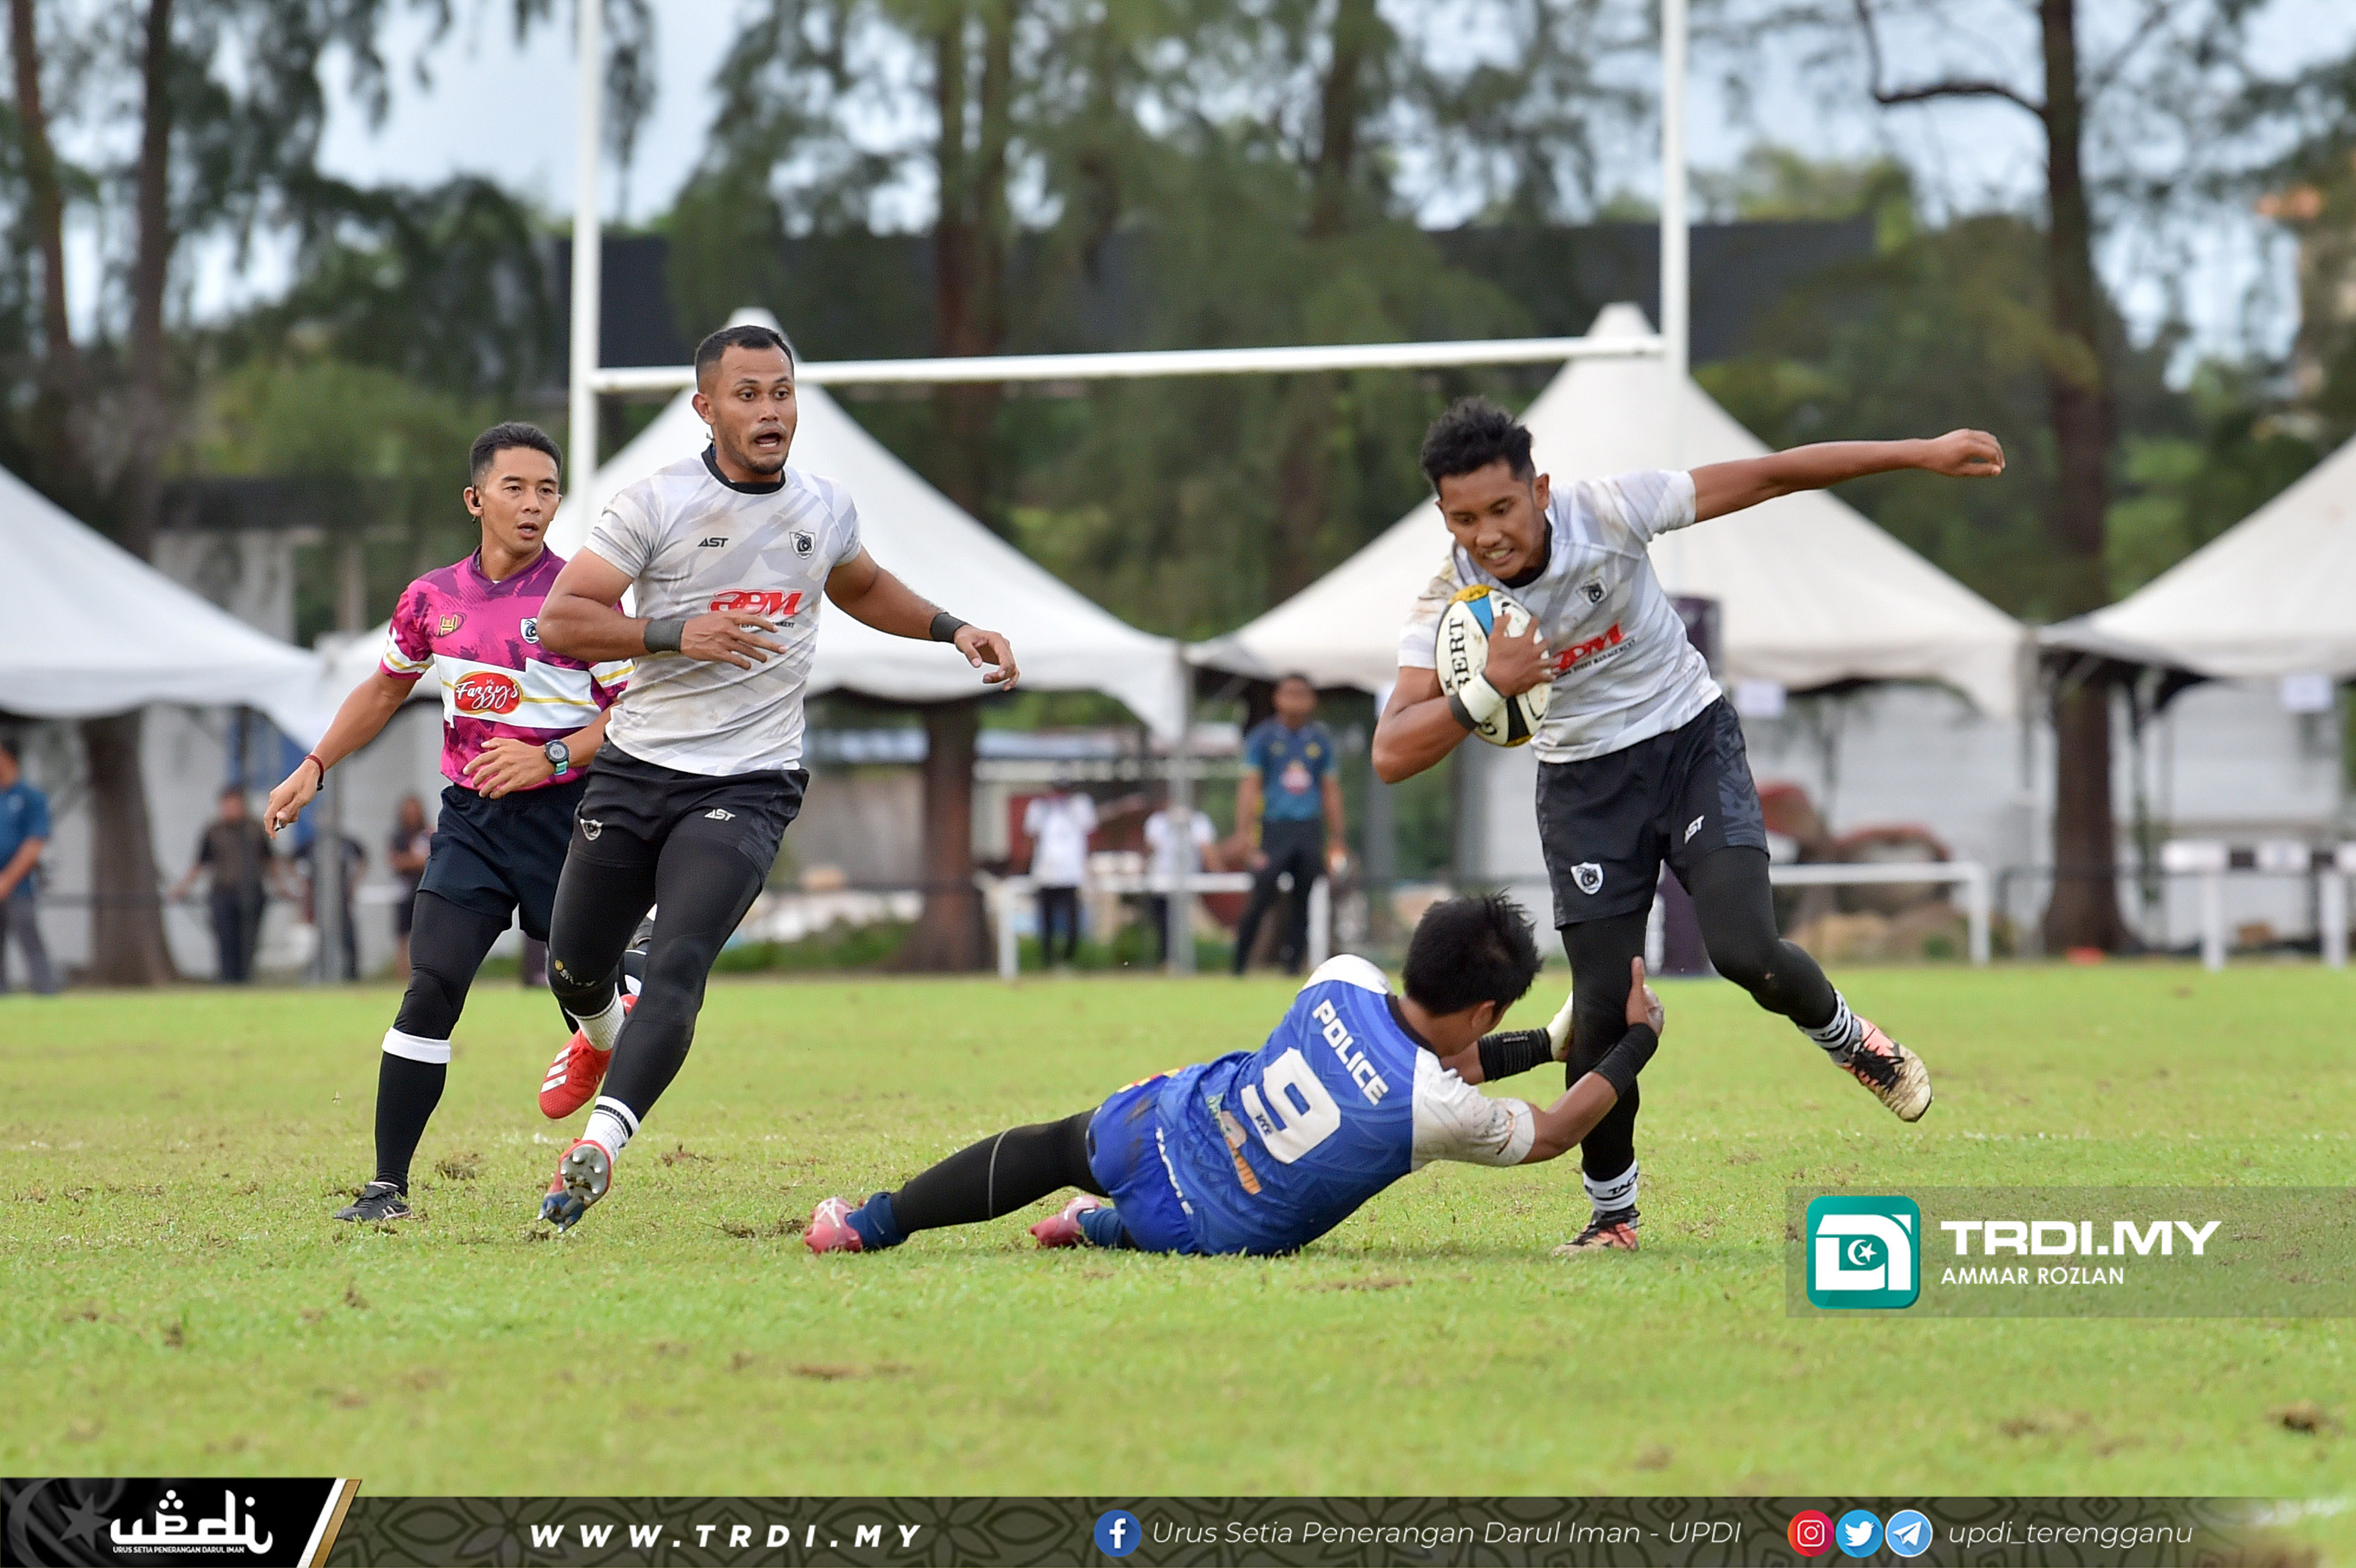 Pasukan Hanelang Warriors muncul Juara Kejohanan Ragbi Terengganu Royal 7's 2021 Piala Tengku Muhammad Ismail kategori terbuka lelaki